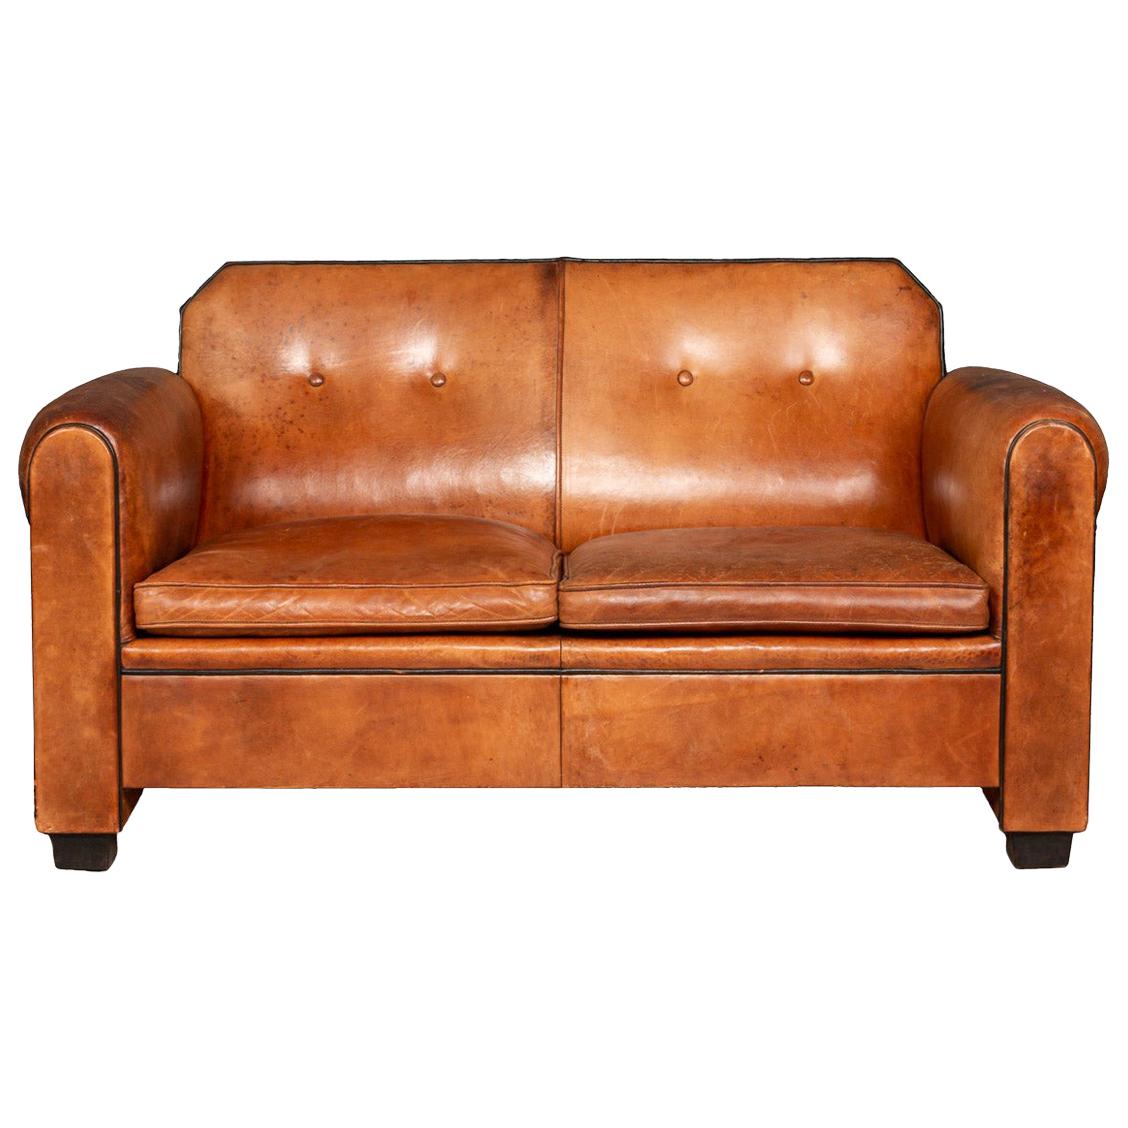 Elegant 20th Century Dutch Two-Seat Tan Leather Sofa